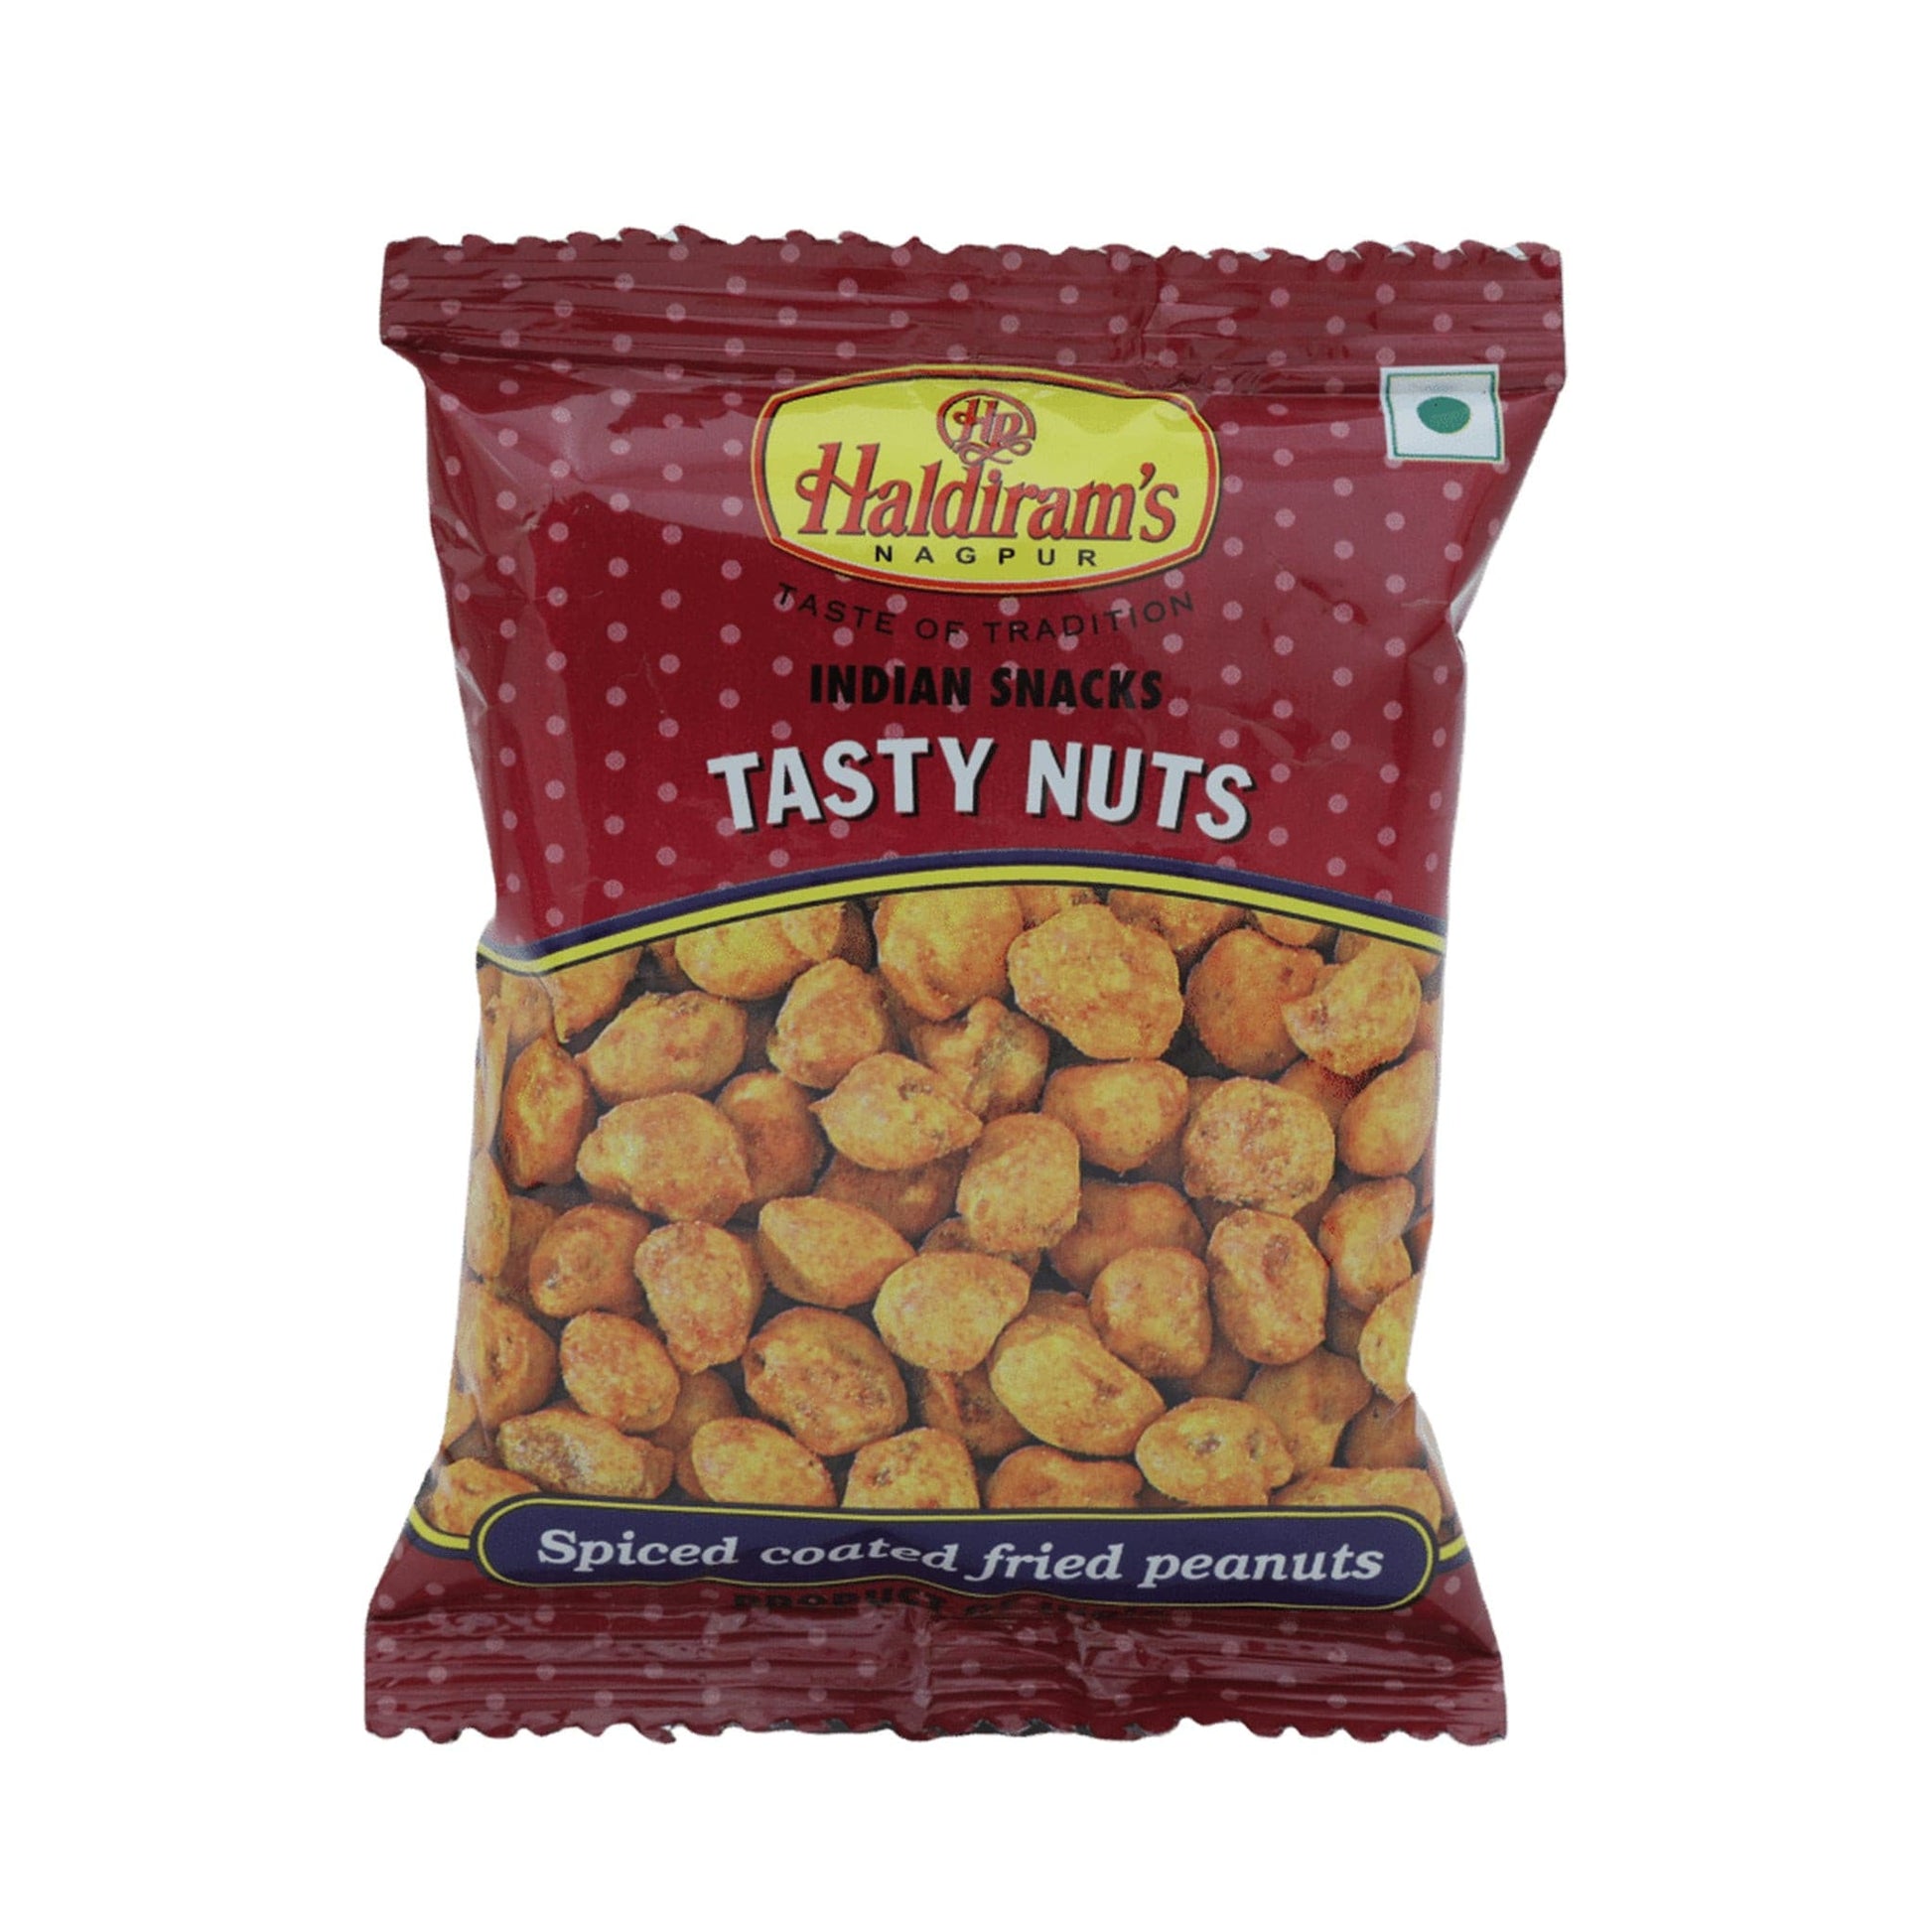 Haldirams Namkeen - Tasty Nuts.